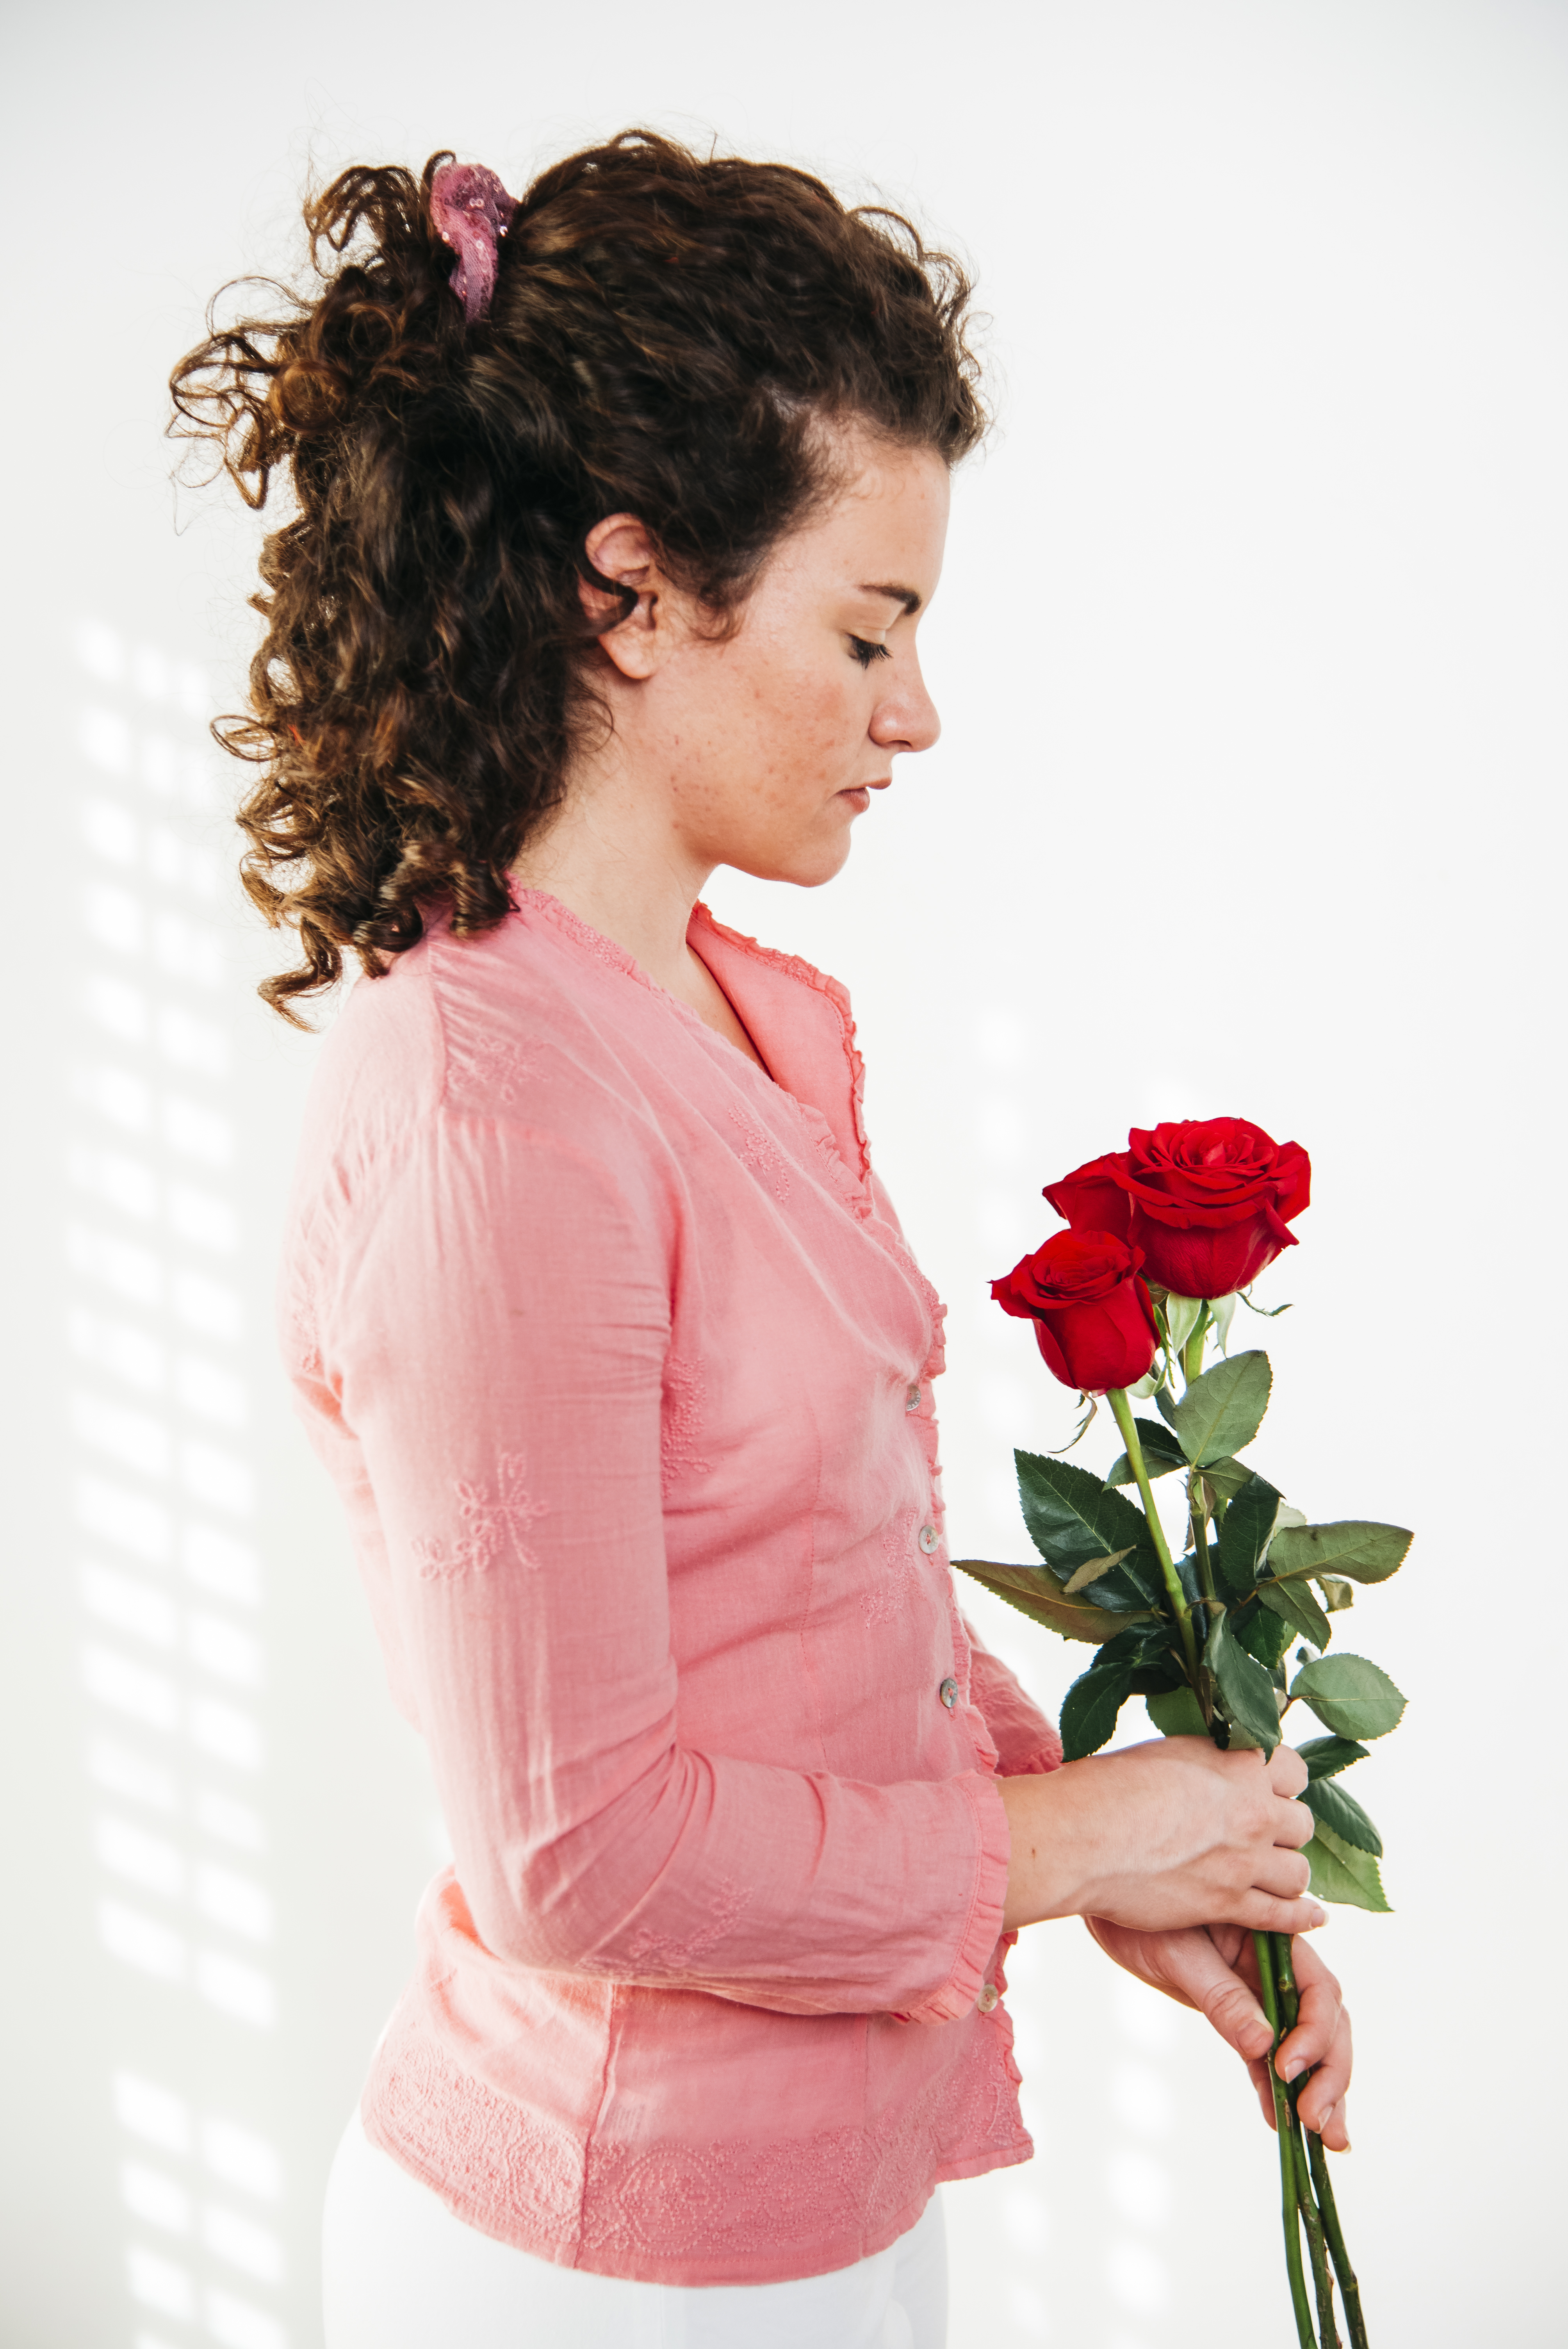 A woman holding roses | Source: FreePik